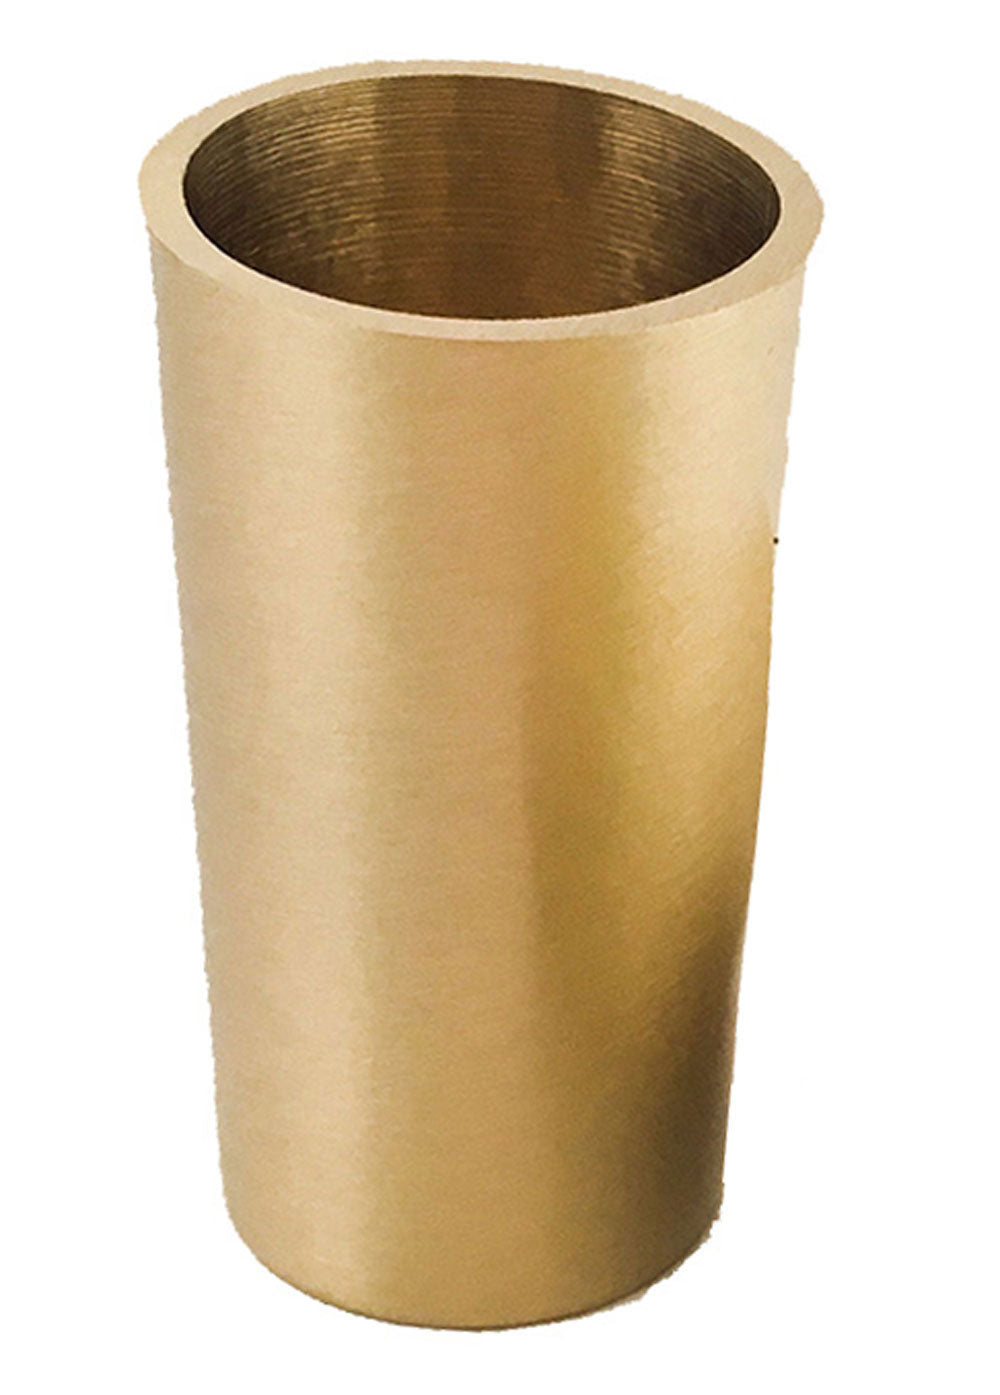 Mondrian Satin Brass Leg Cup